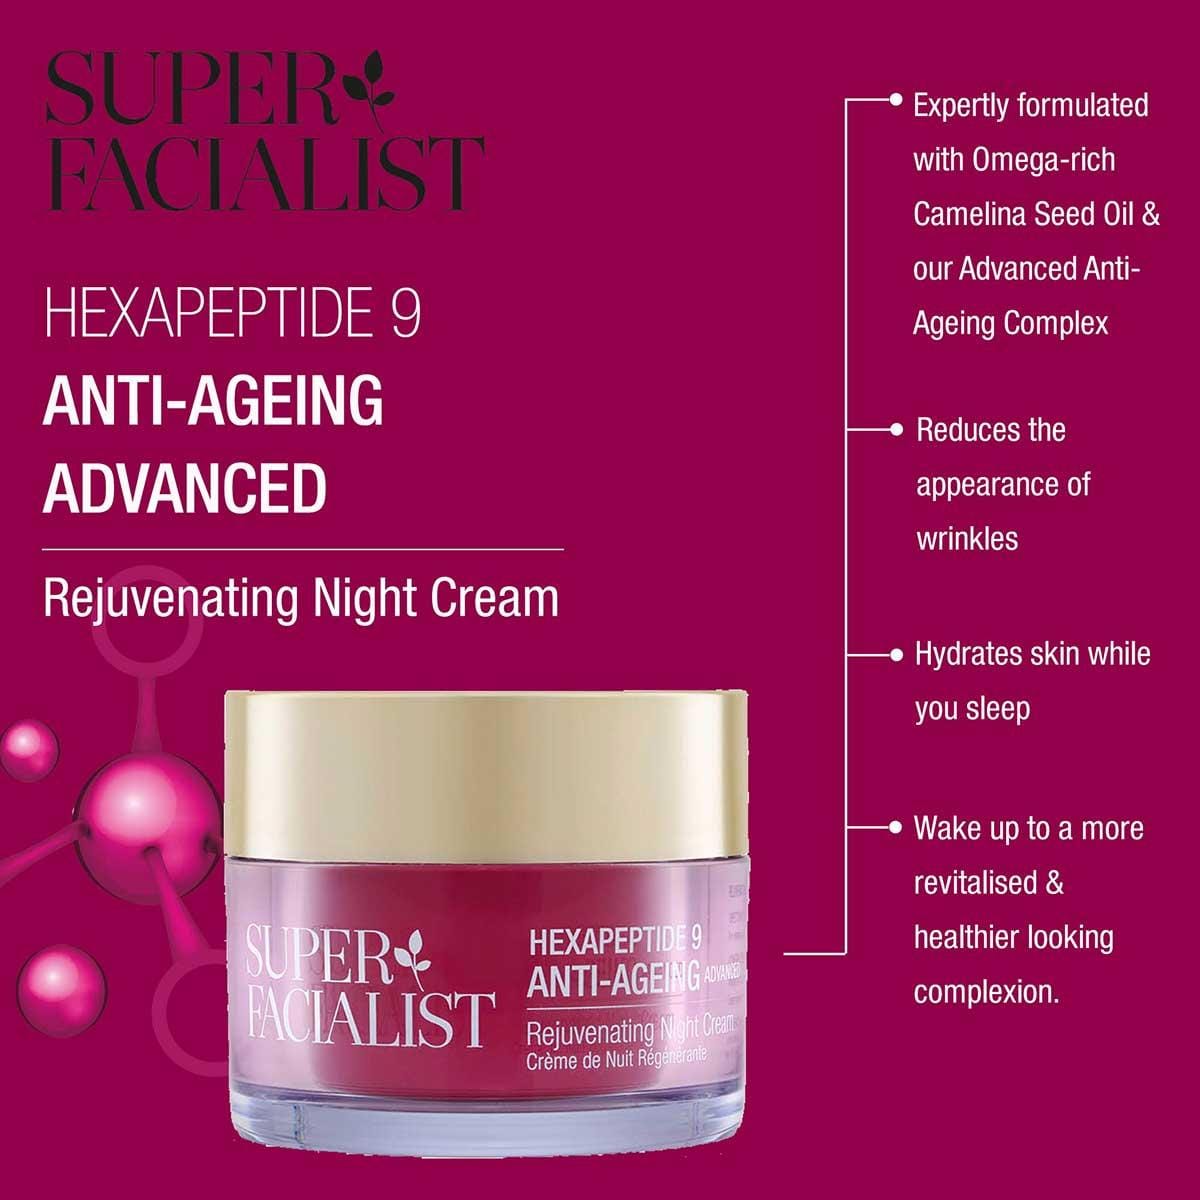 Super Facialist Hexapeptide-9 Anti-Ageing Advanced Rejuvenating Night Cream 50ml